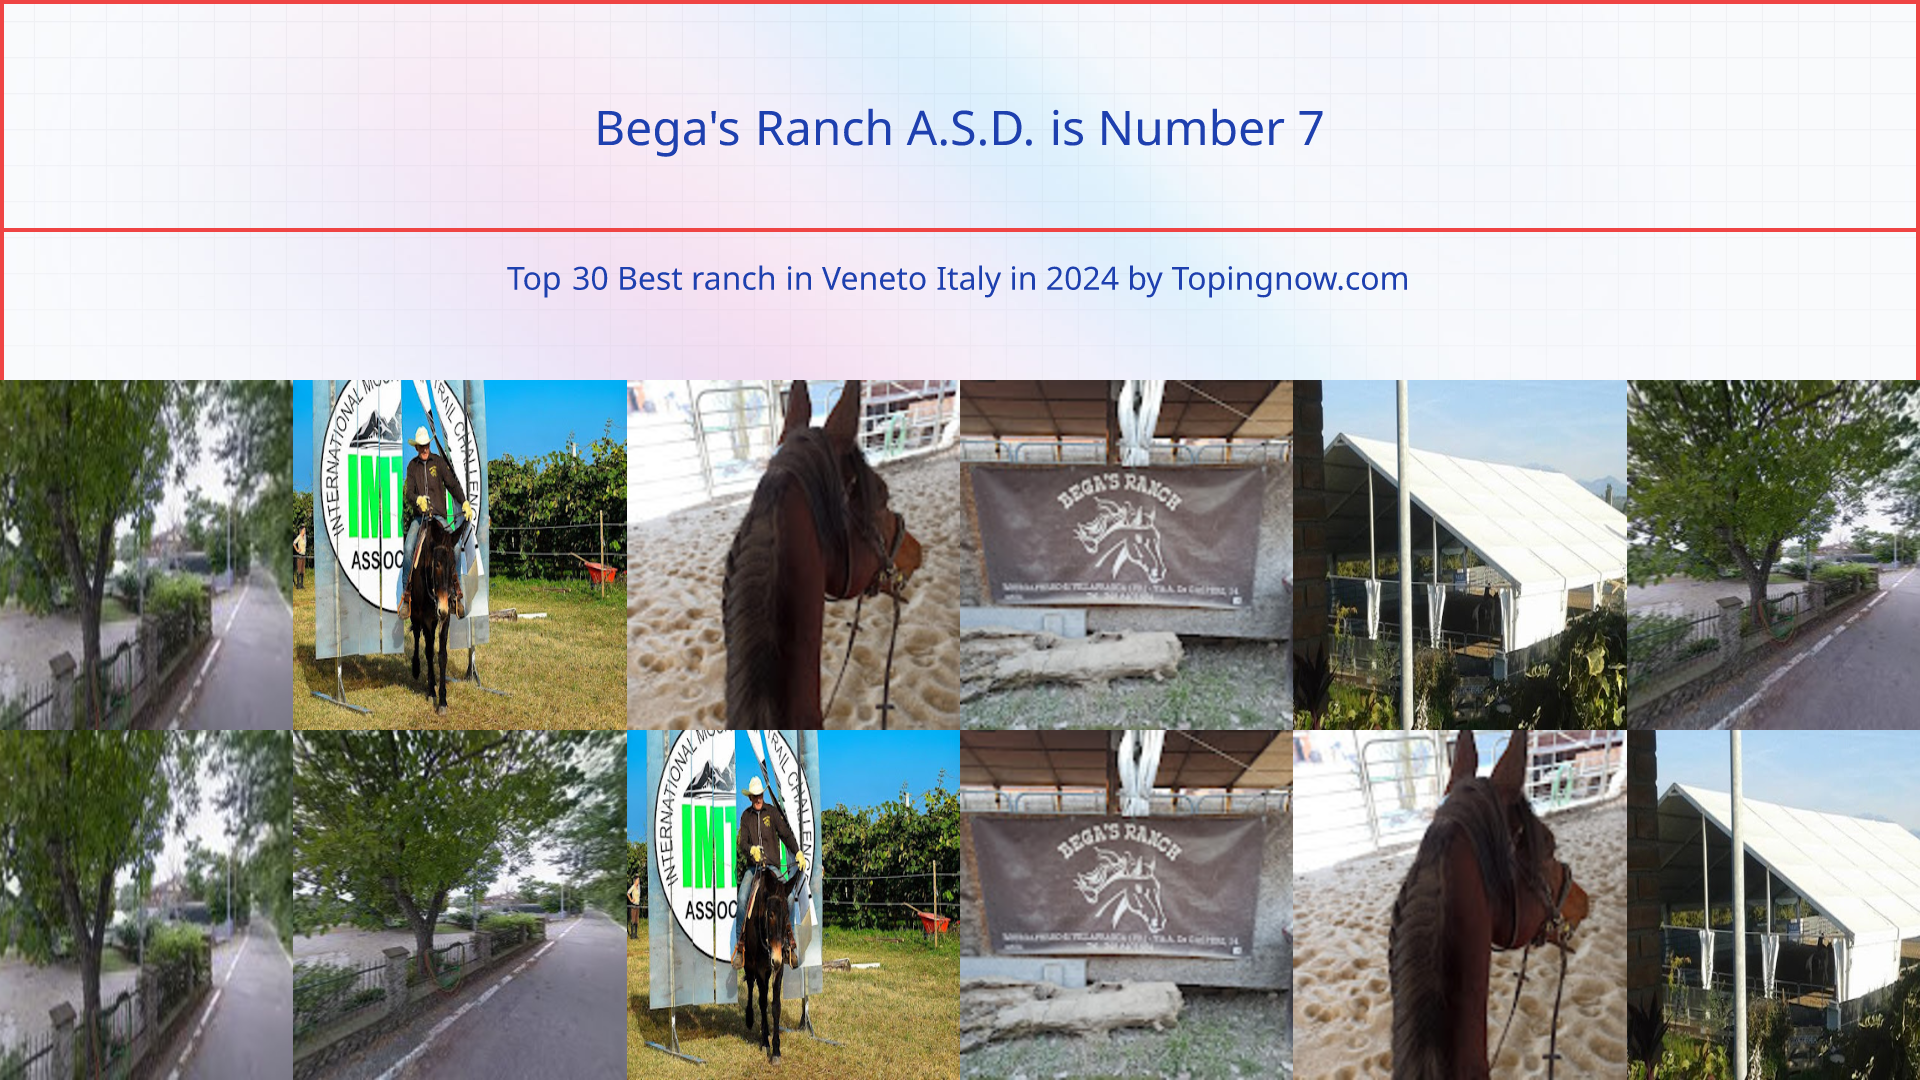 Bega's Ranch A.S.D.: Top 30 Best ranch in Veneto Italy in 2024